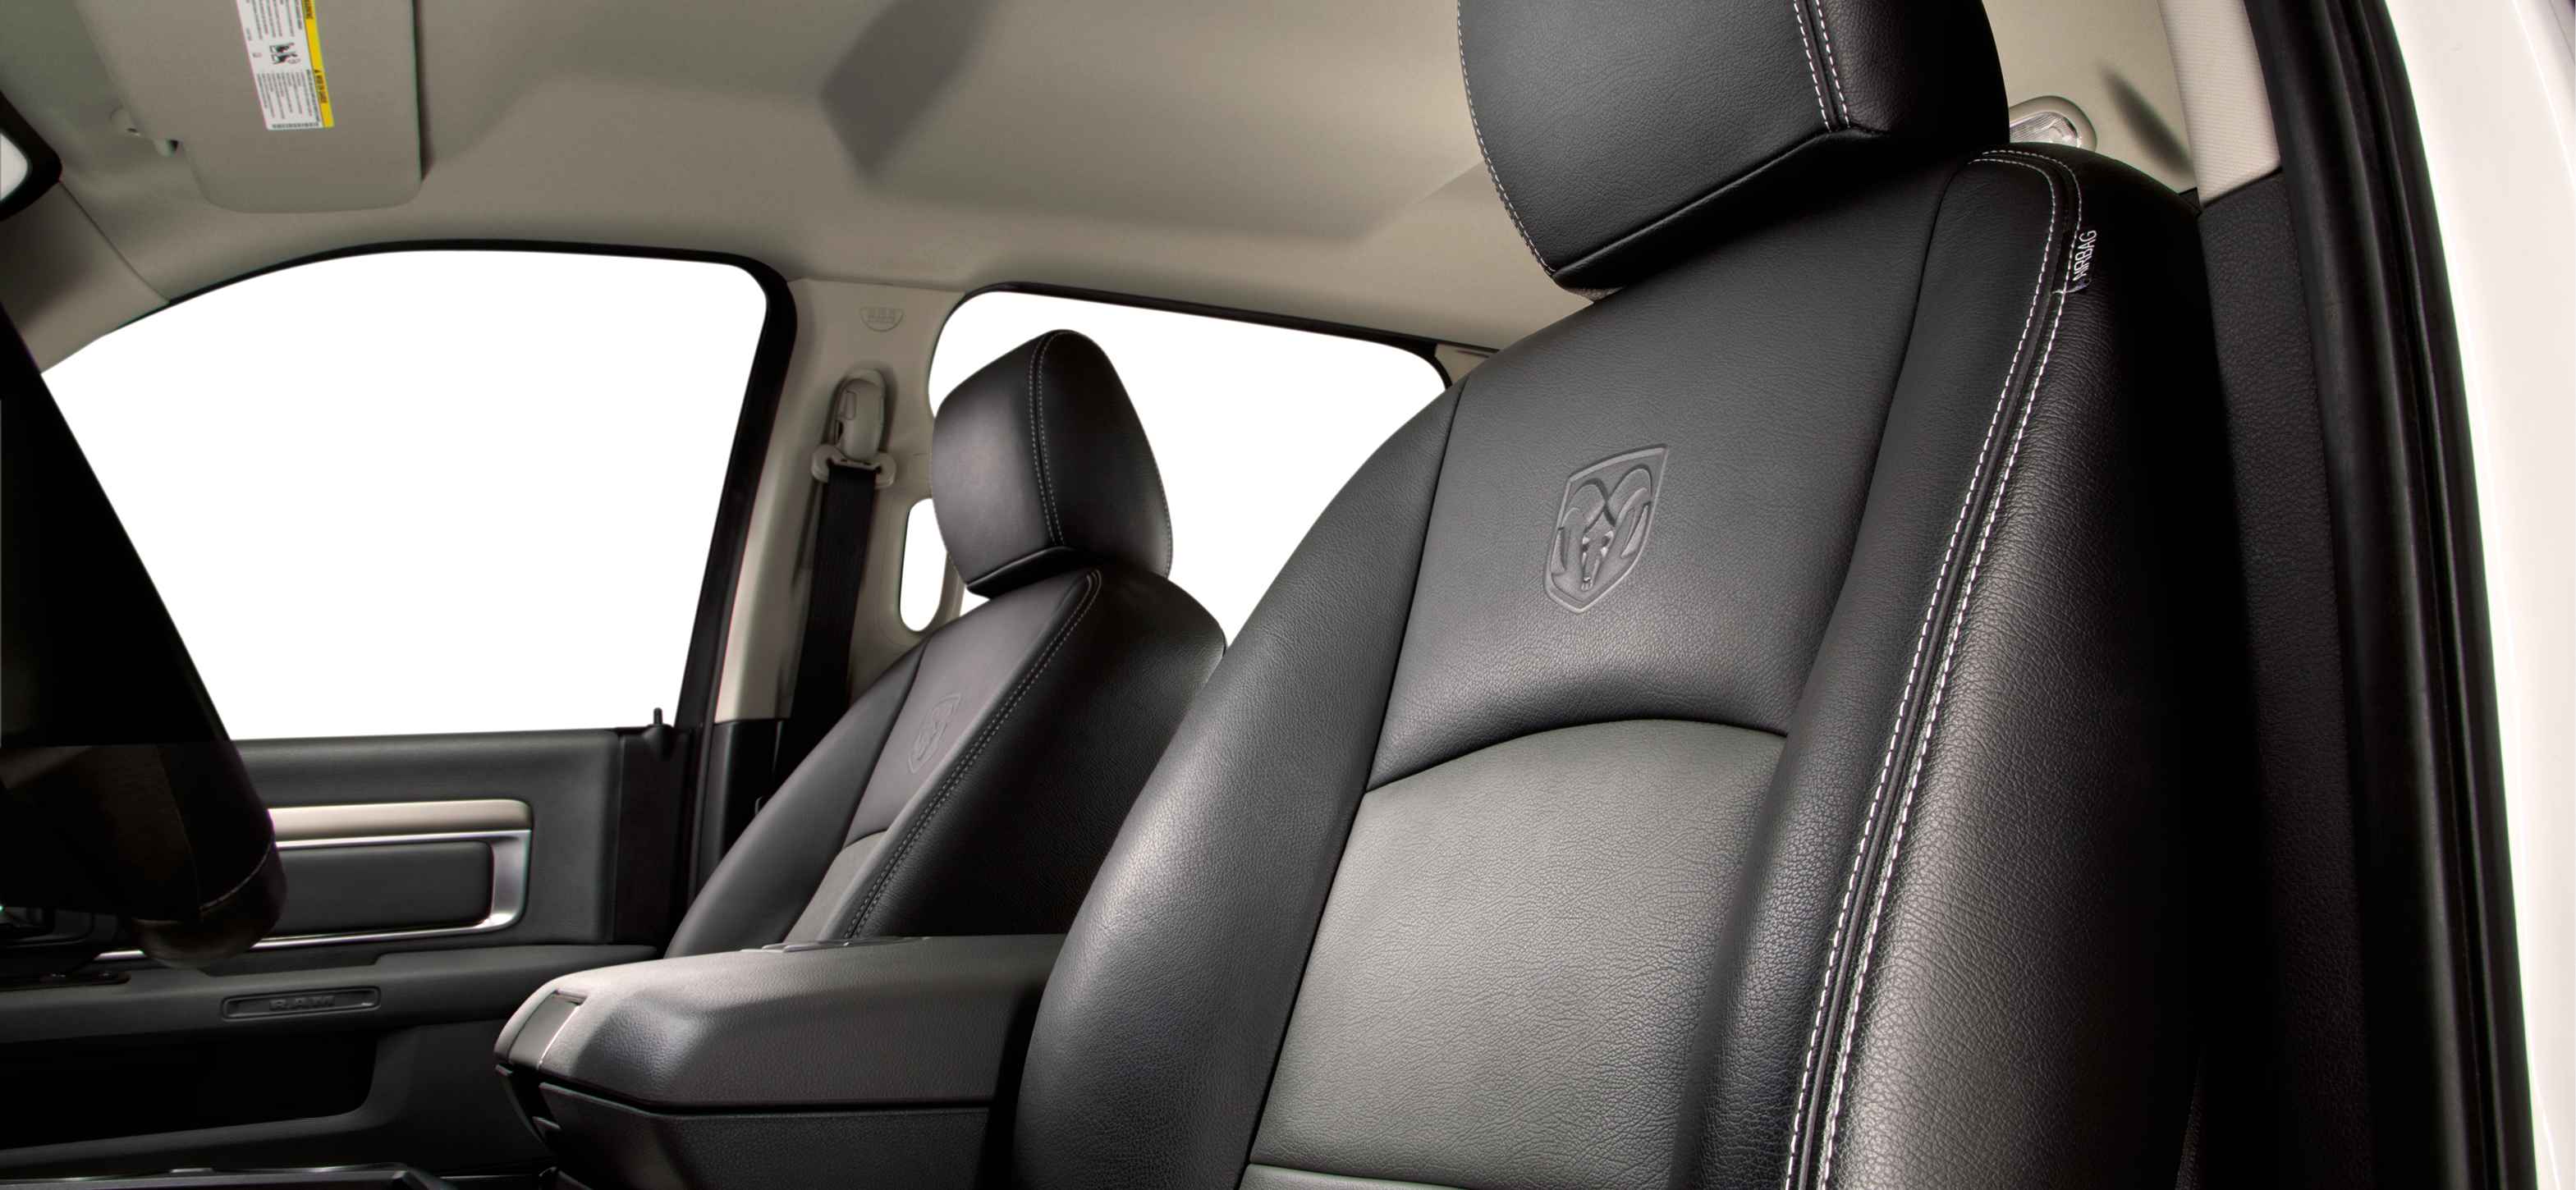 OEM 2019 Ram 5500 Chassis Cab Katzkin Leather (Part #LRHD0192DU)